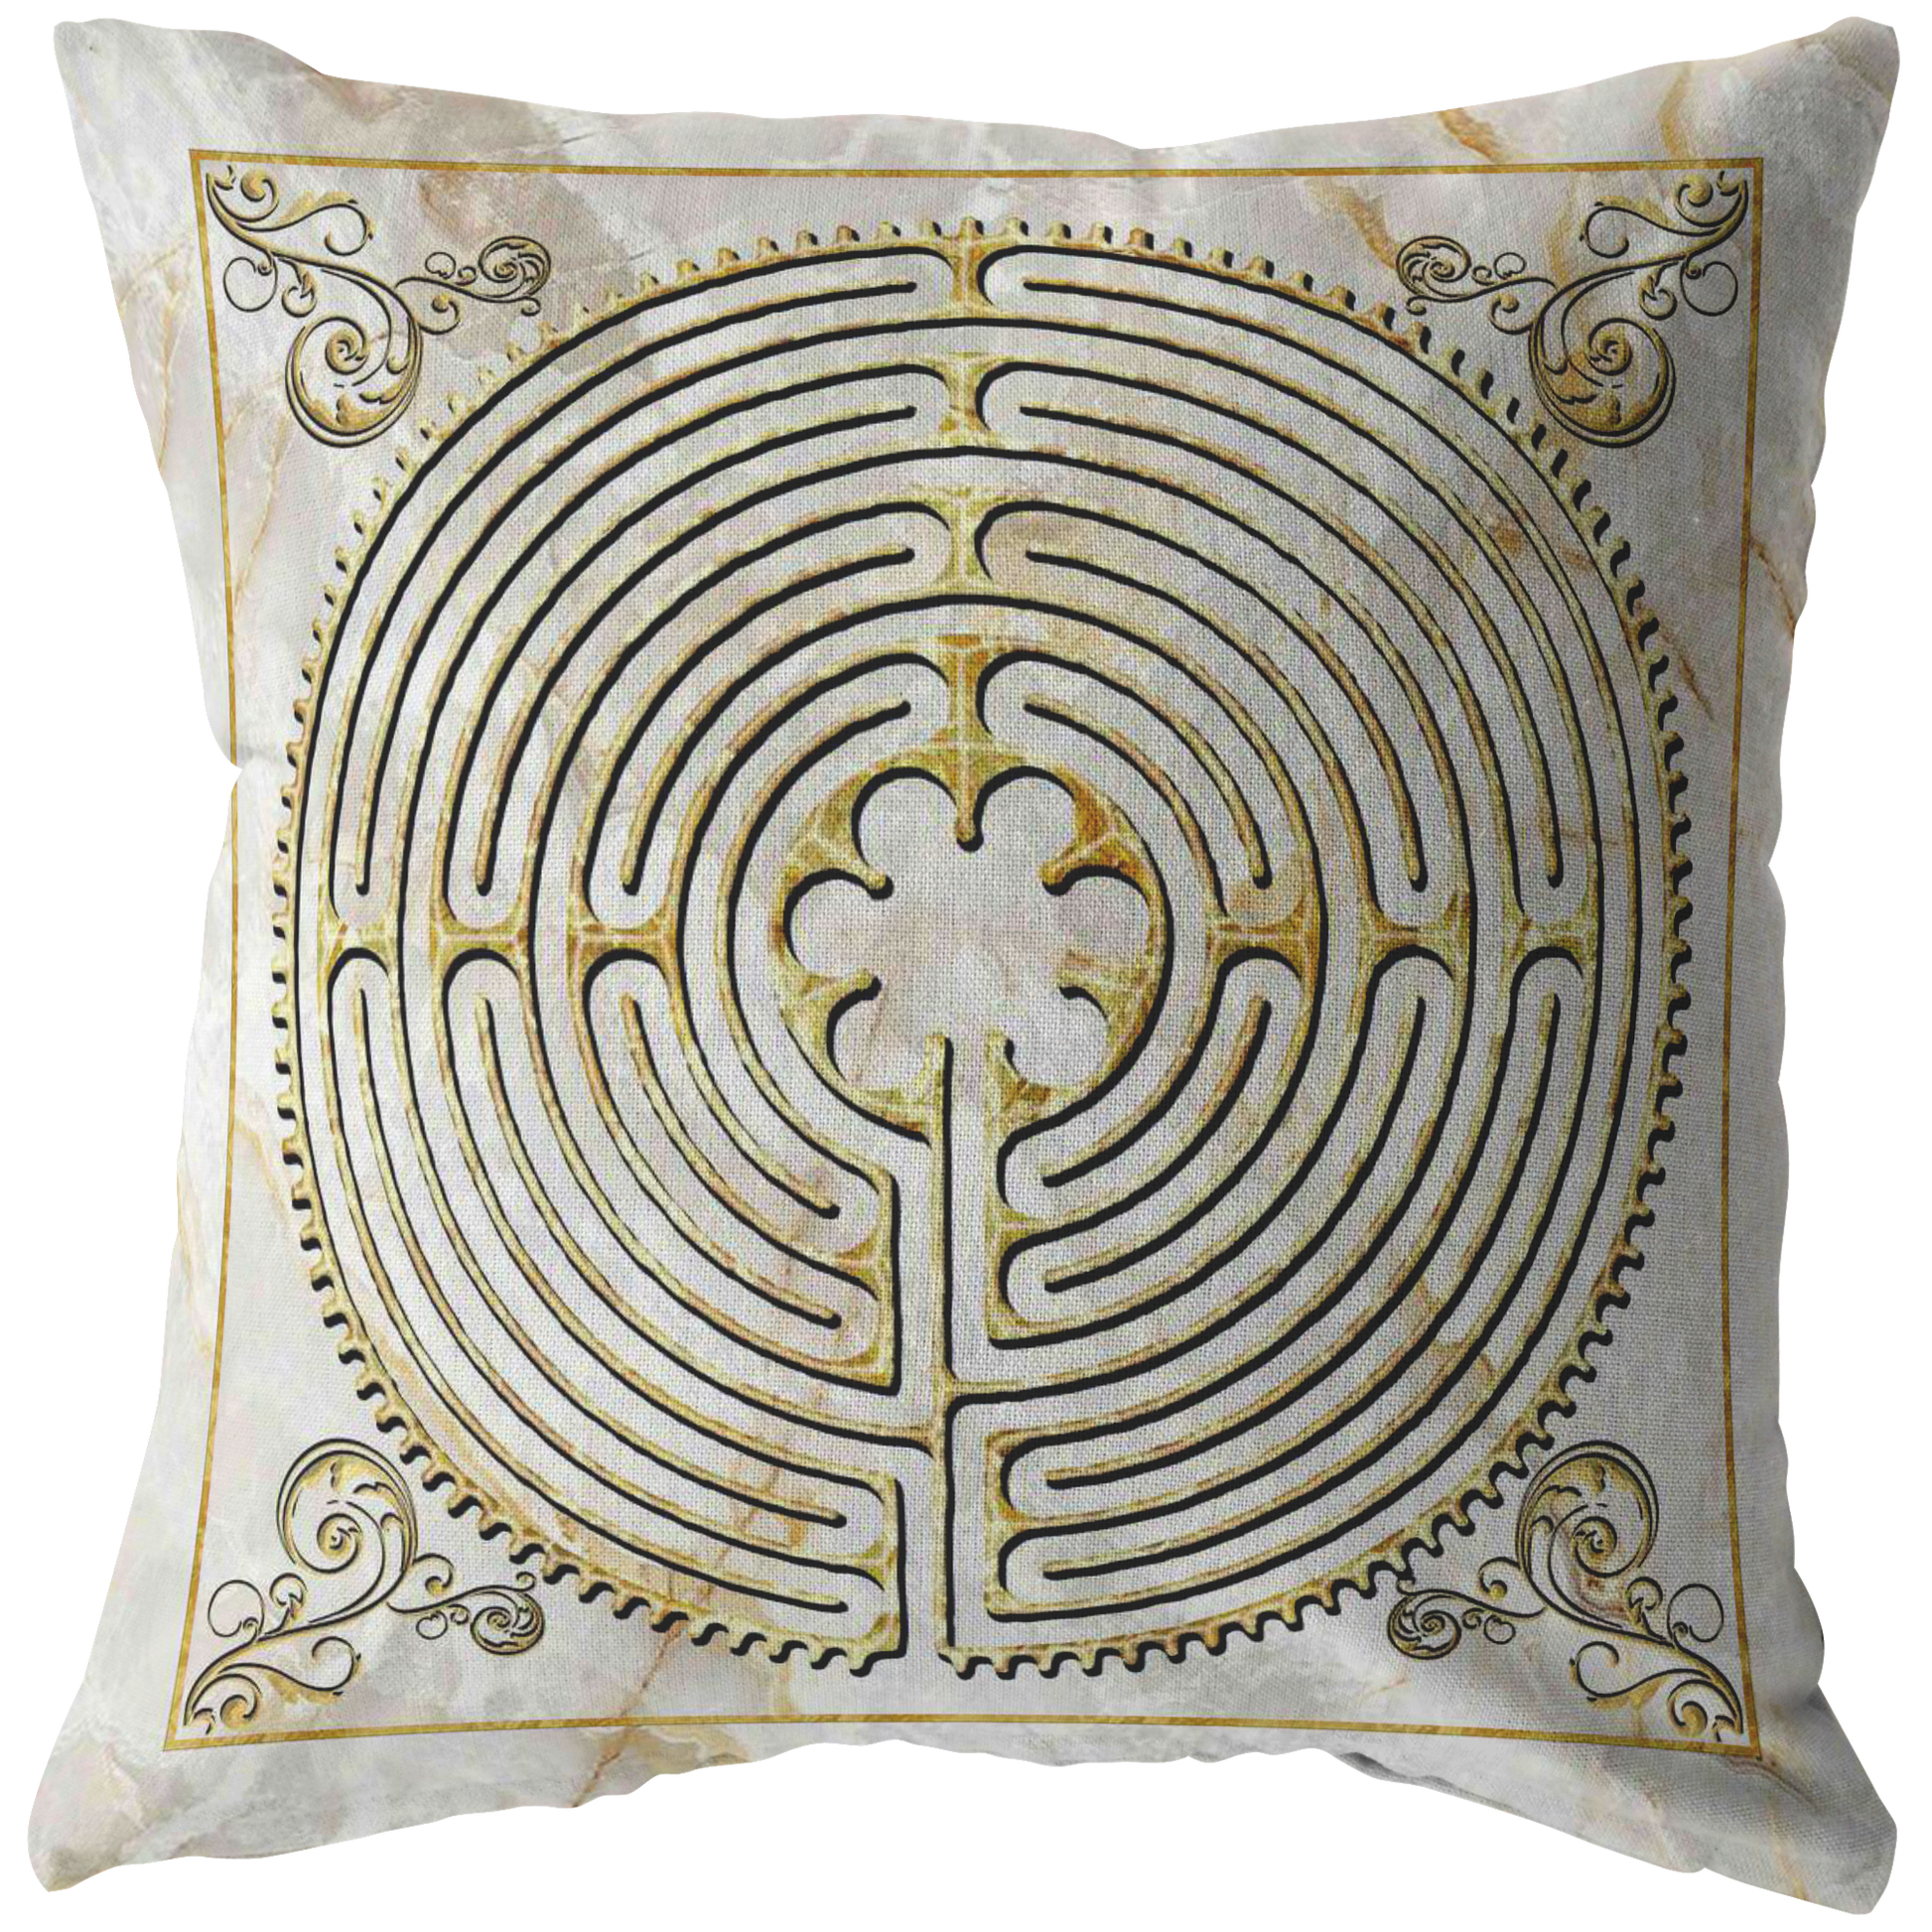 labyrinth,finger labyrinth,finger labyrinth for stress,finger labyrinth for meditation,cathedral labyrinth,sacred labyrinth,finger labyrinth for mindfulness, chartres cathedral, chartres cathedral labyrinth